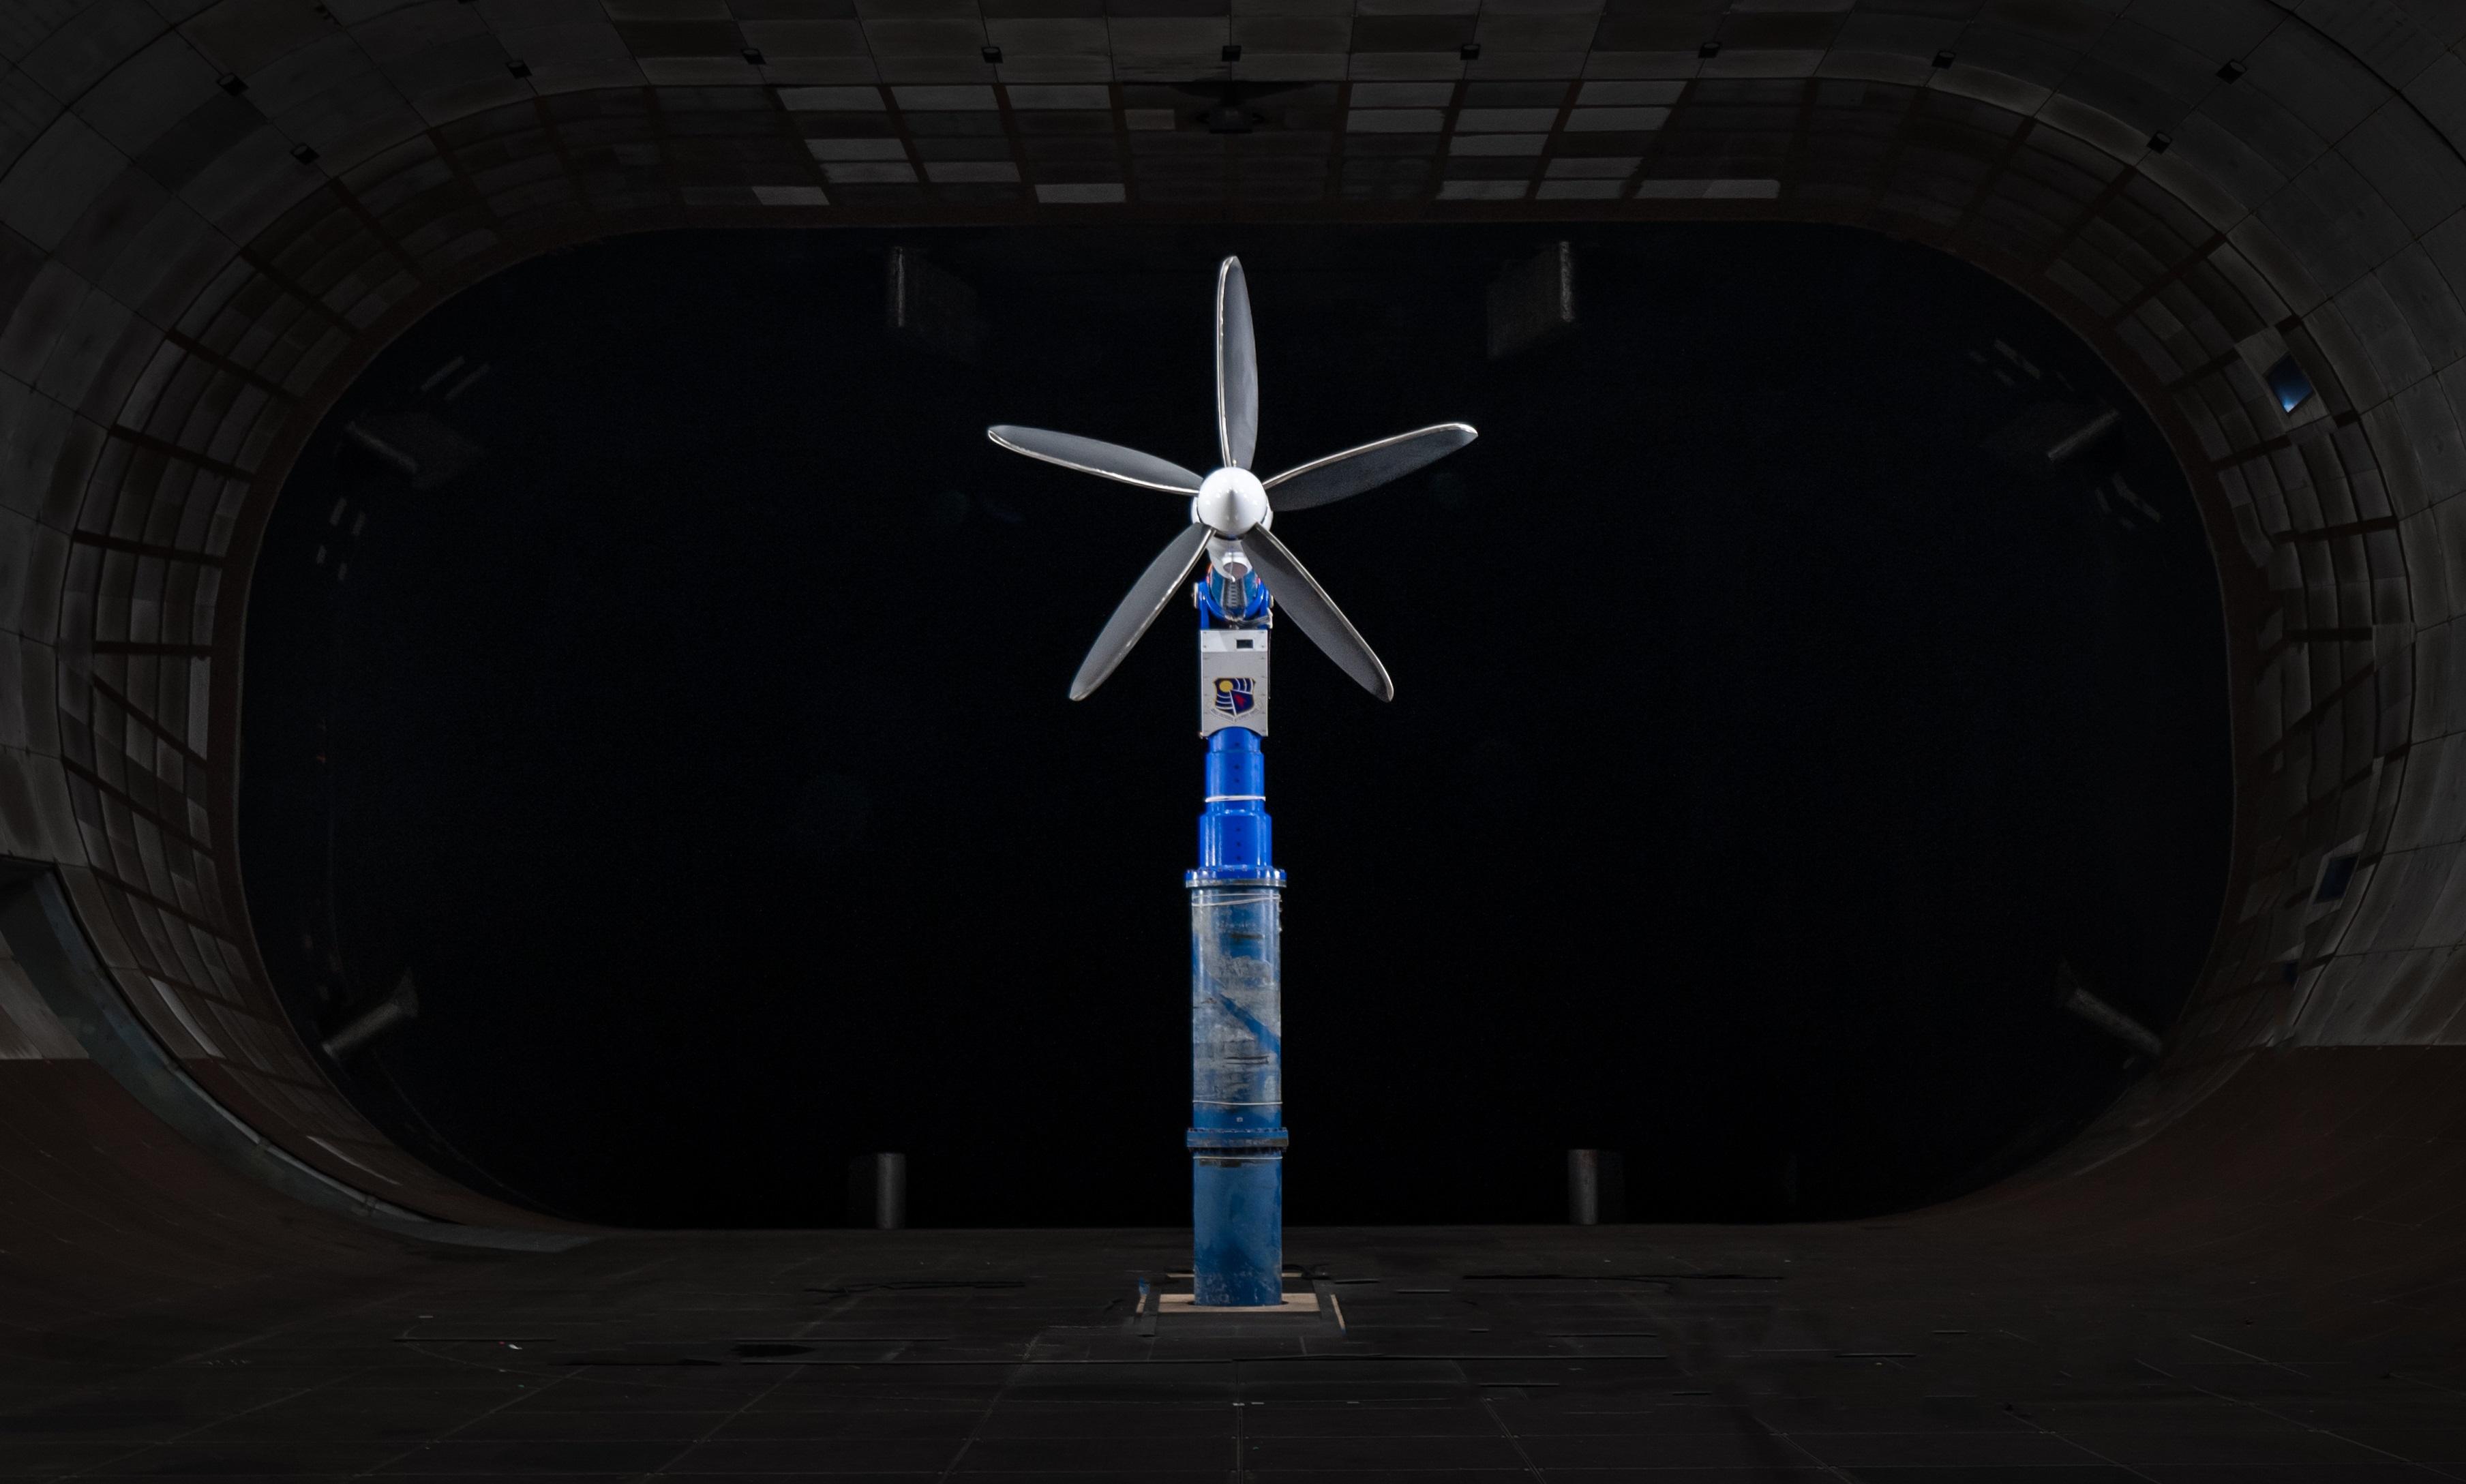 Joby Tests eVTOL Propeller In NFAC Wind Tunnel | Aviation Week Network